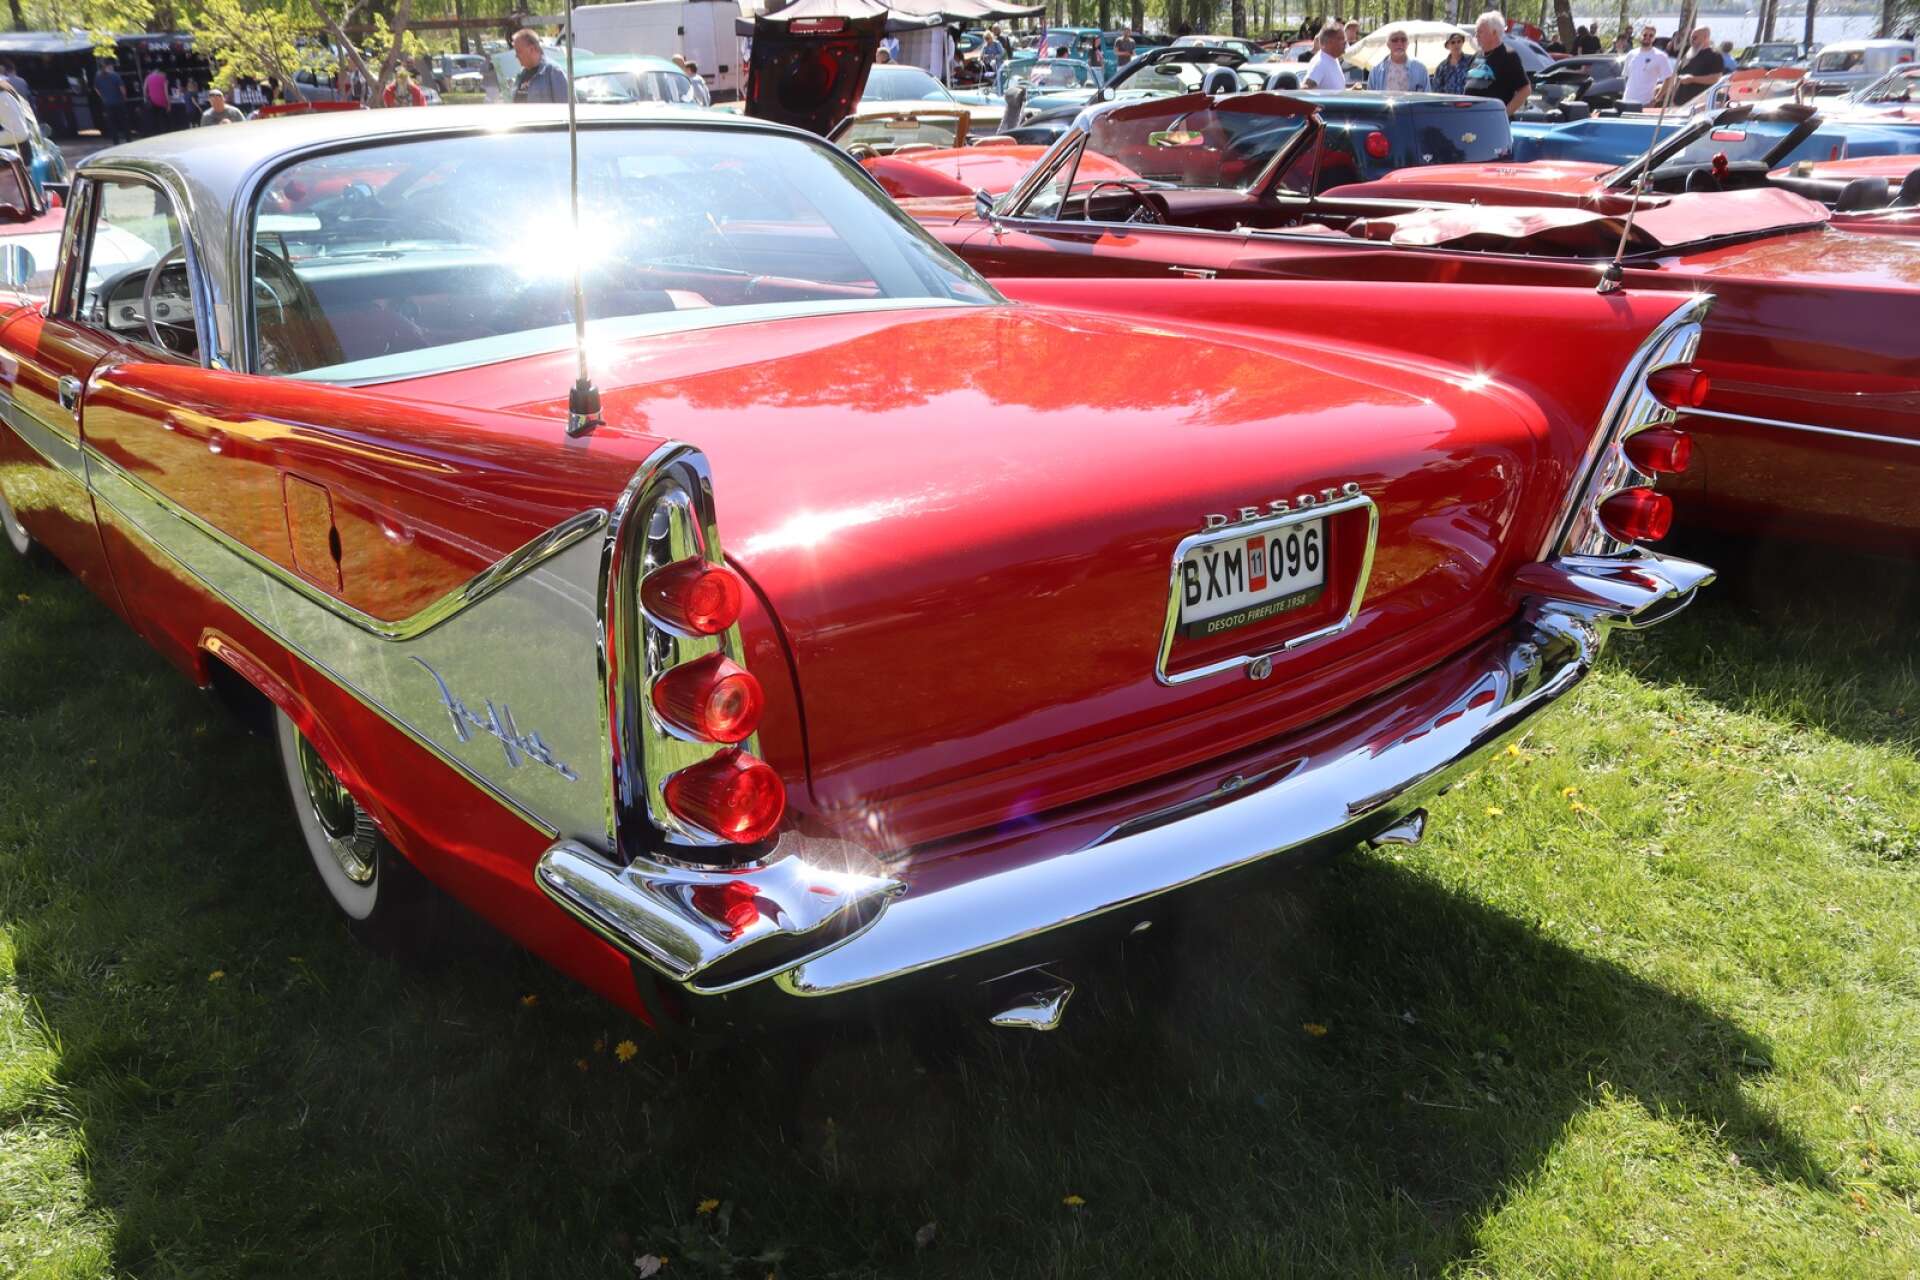 Desoto Fireflite av 1958 års modell levde upp till dåtidens mode med stora fenor.